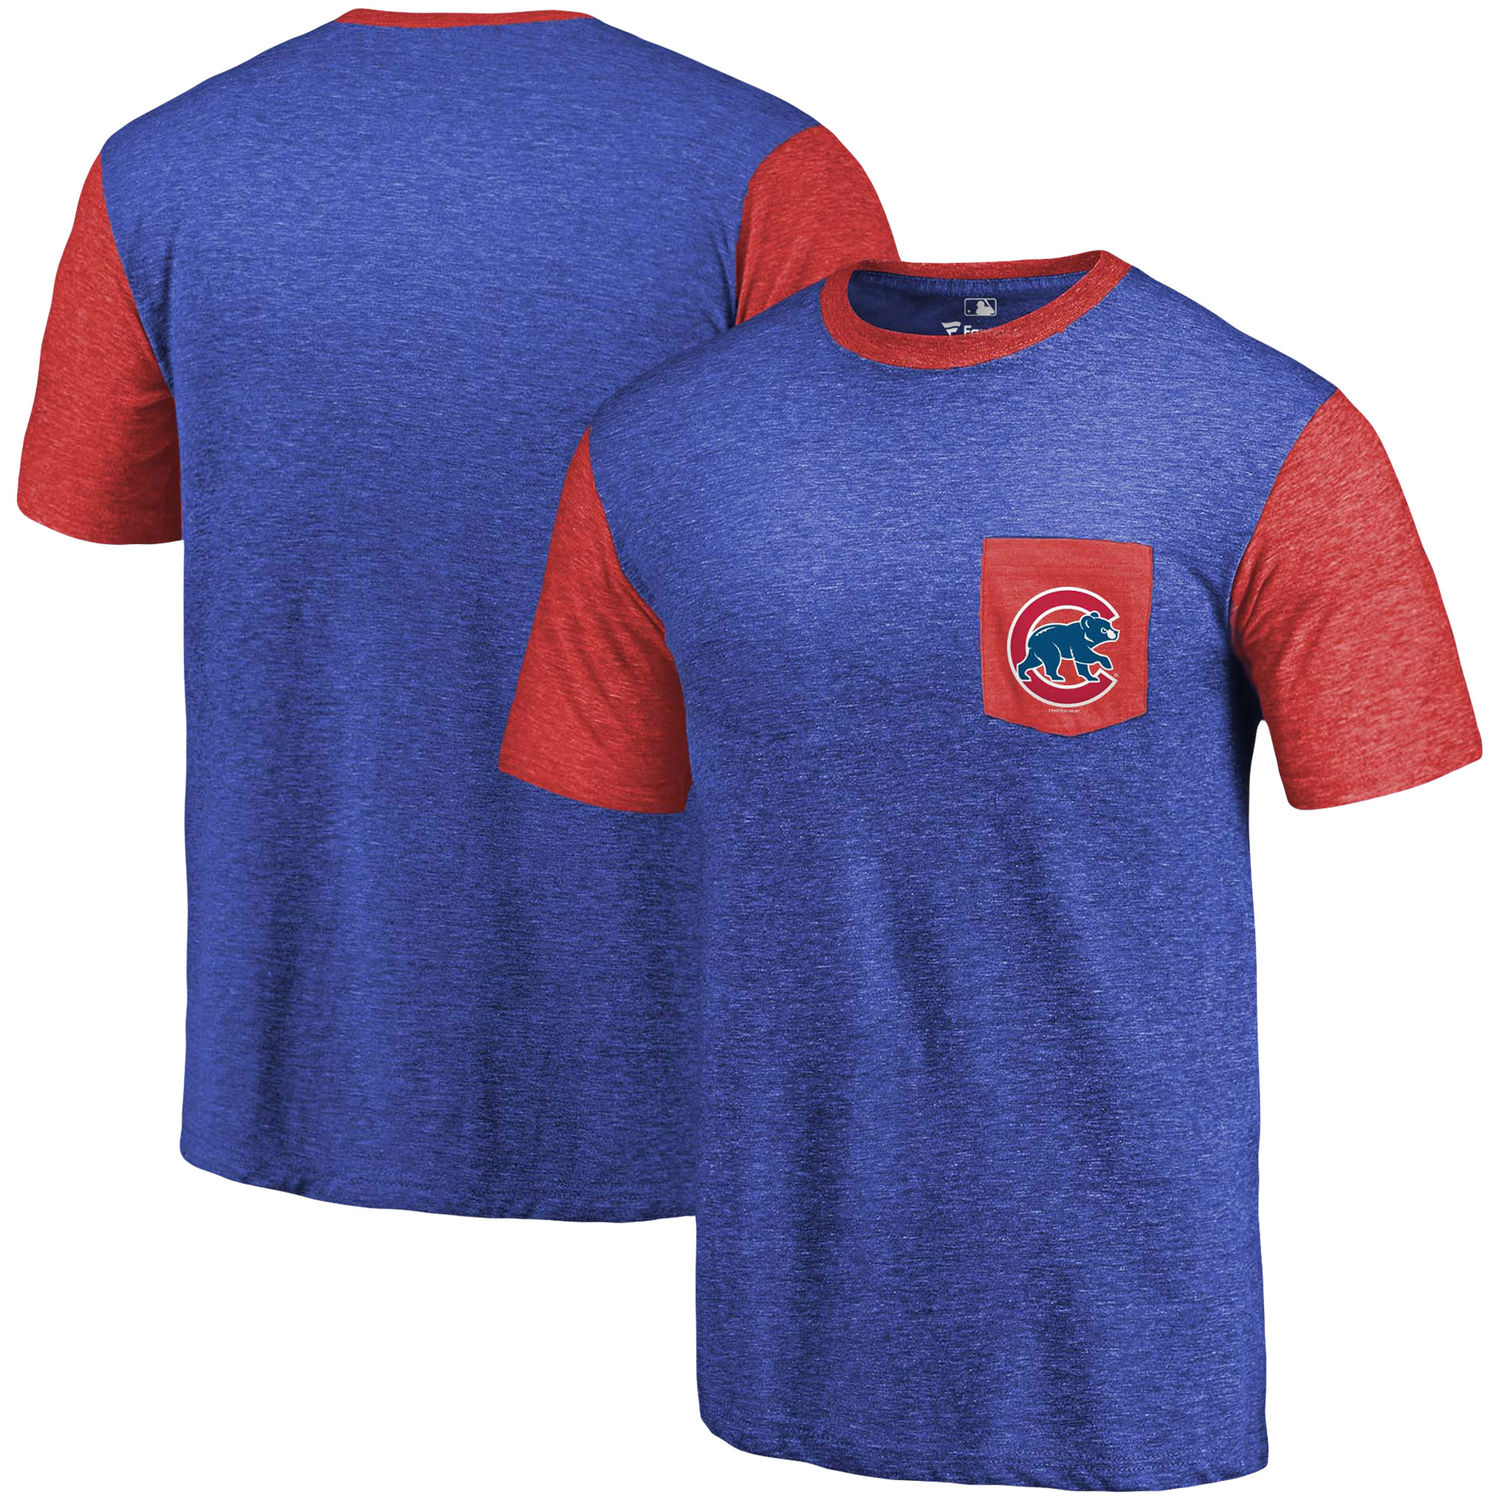 Men's Chicago Cubs Fanatics Branded Royal-Red Refresh Pocket T-Shirt